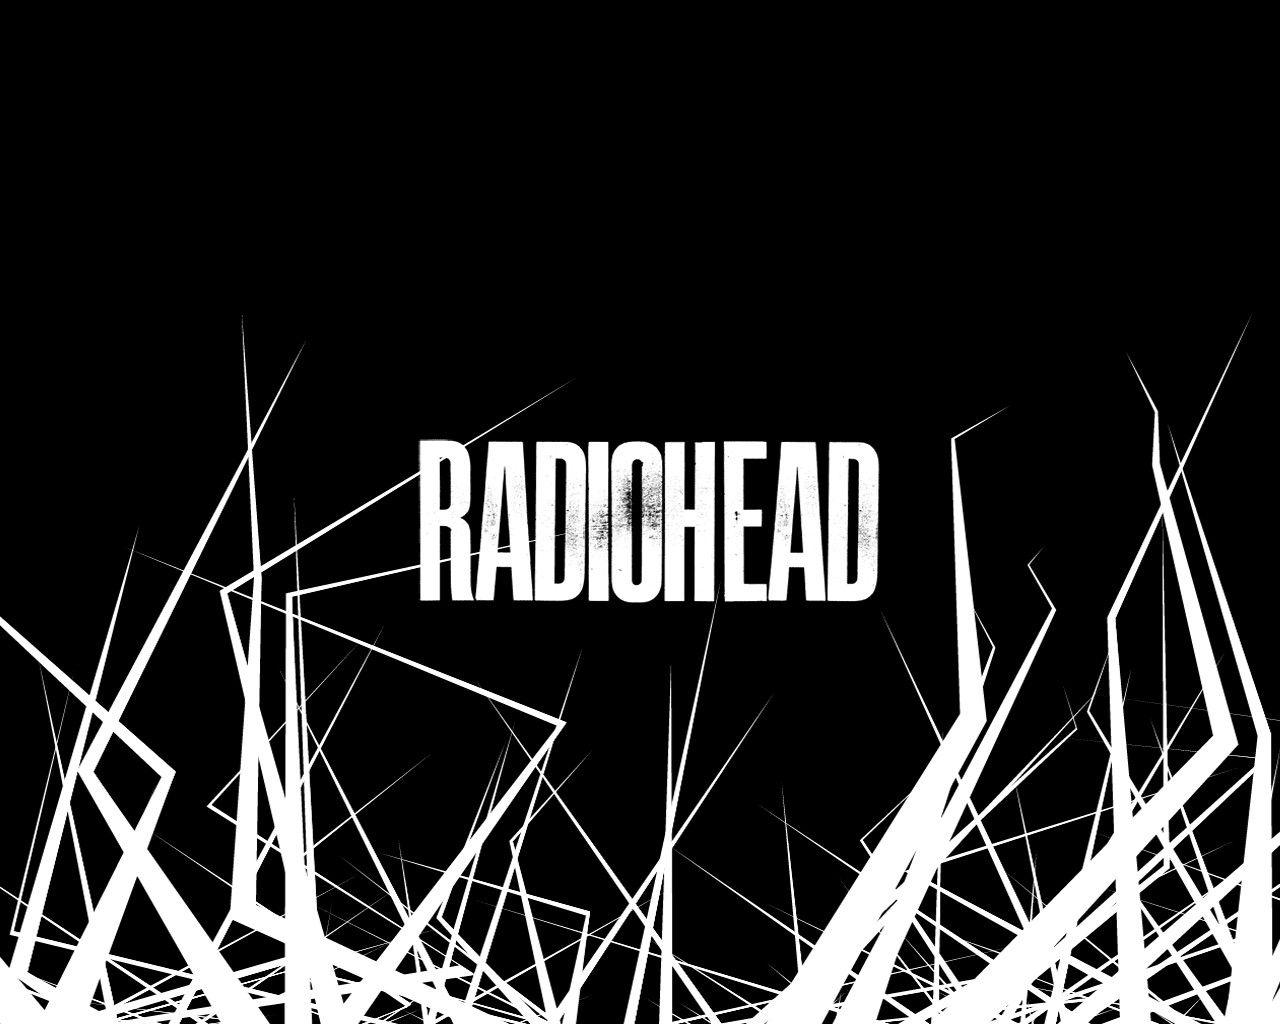 Radiohead, yes!. #EvezBEADz. Radiohead and Thom yorke